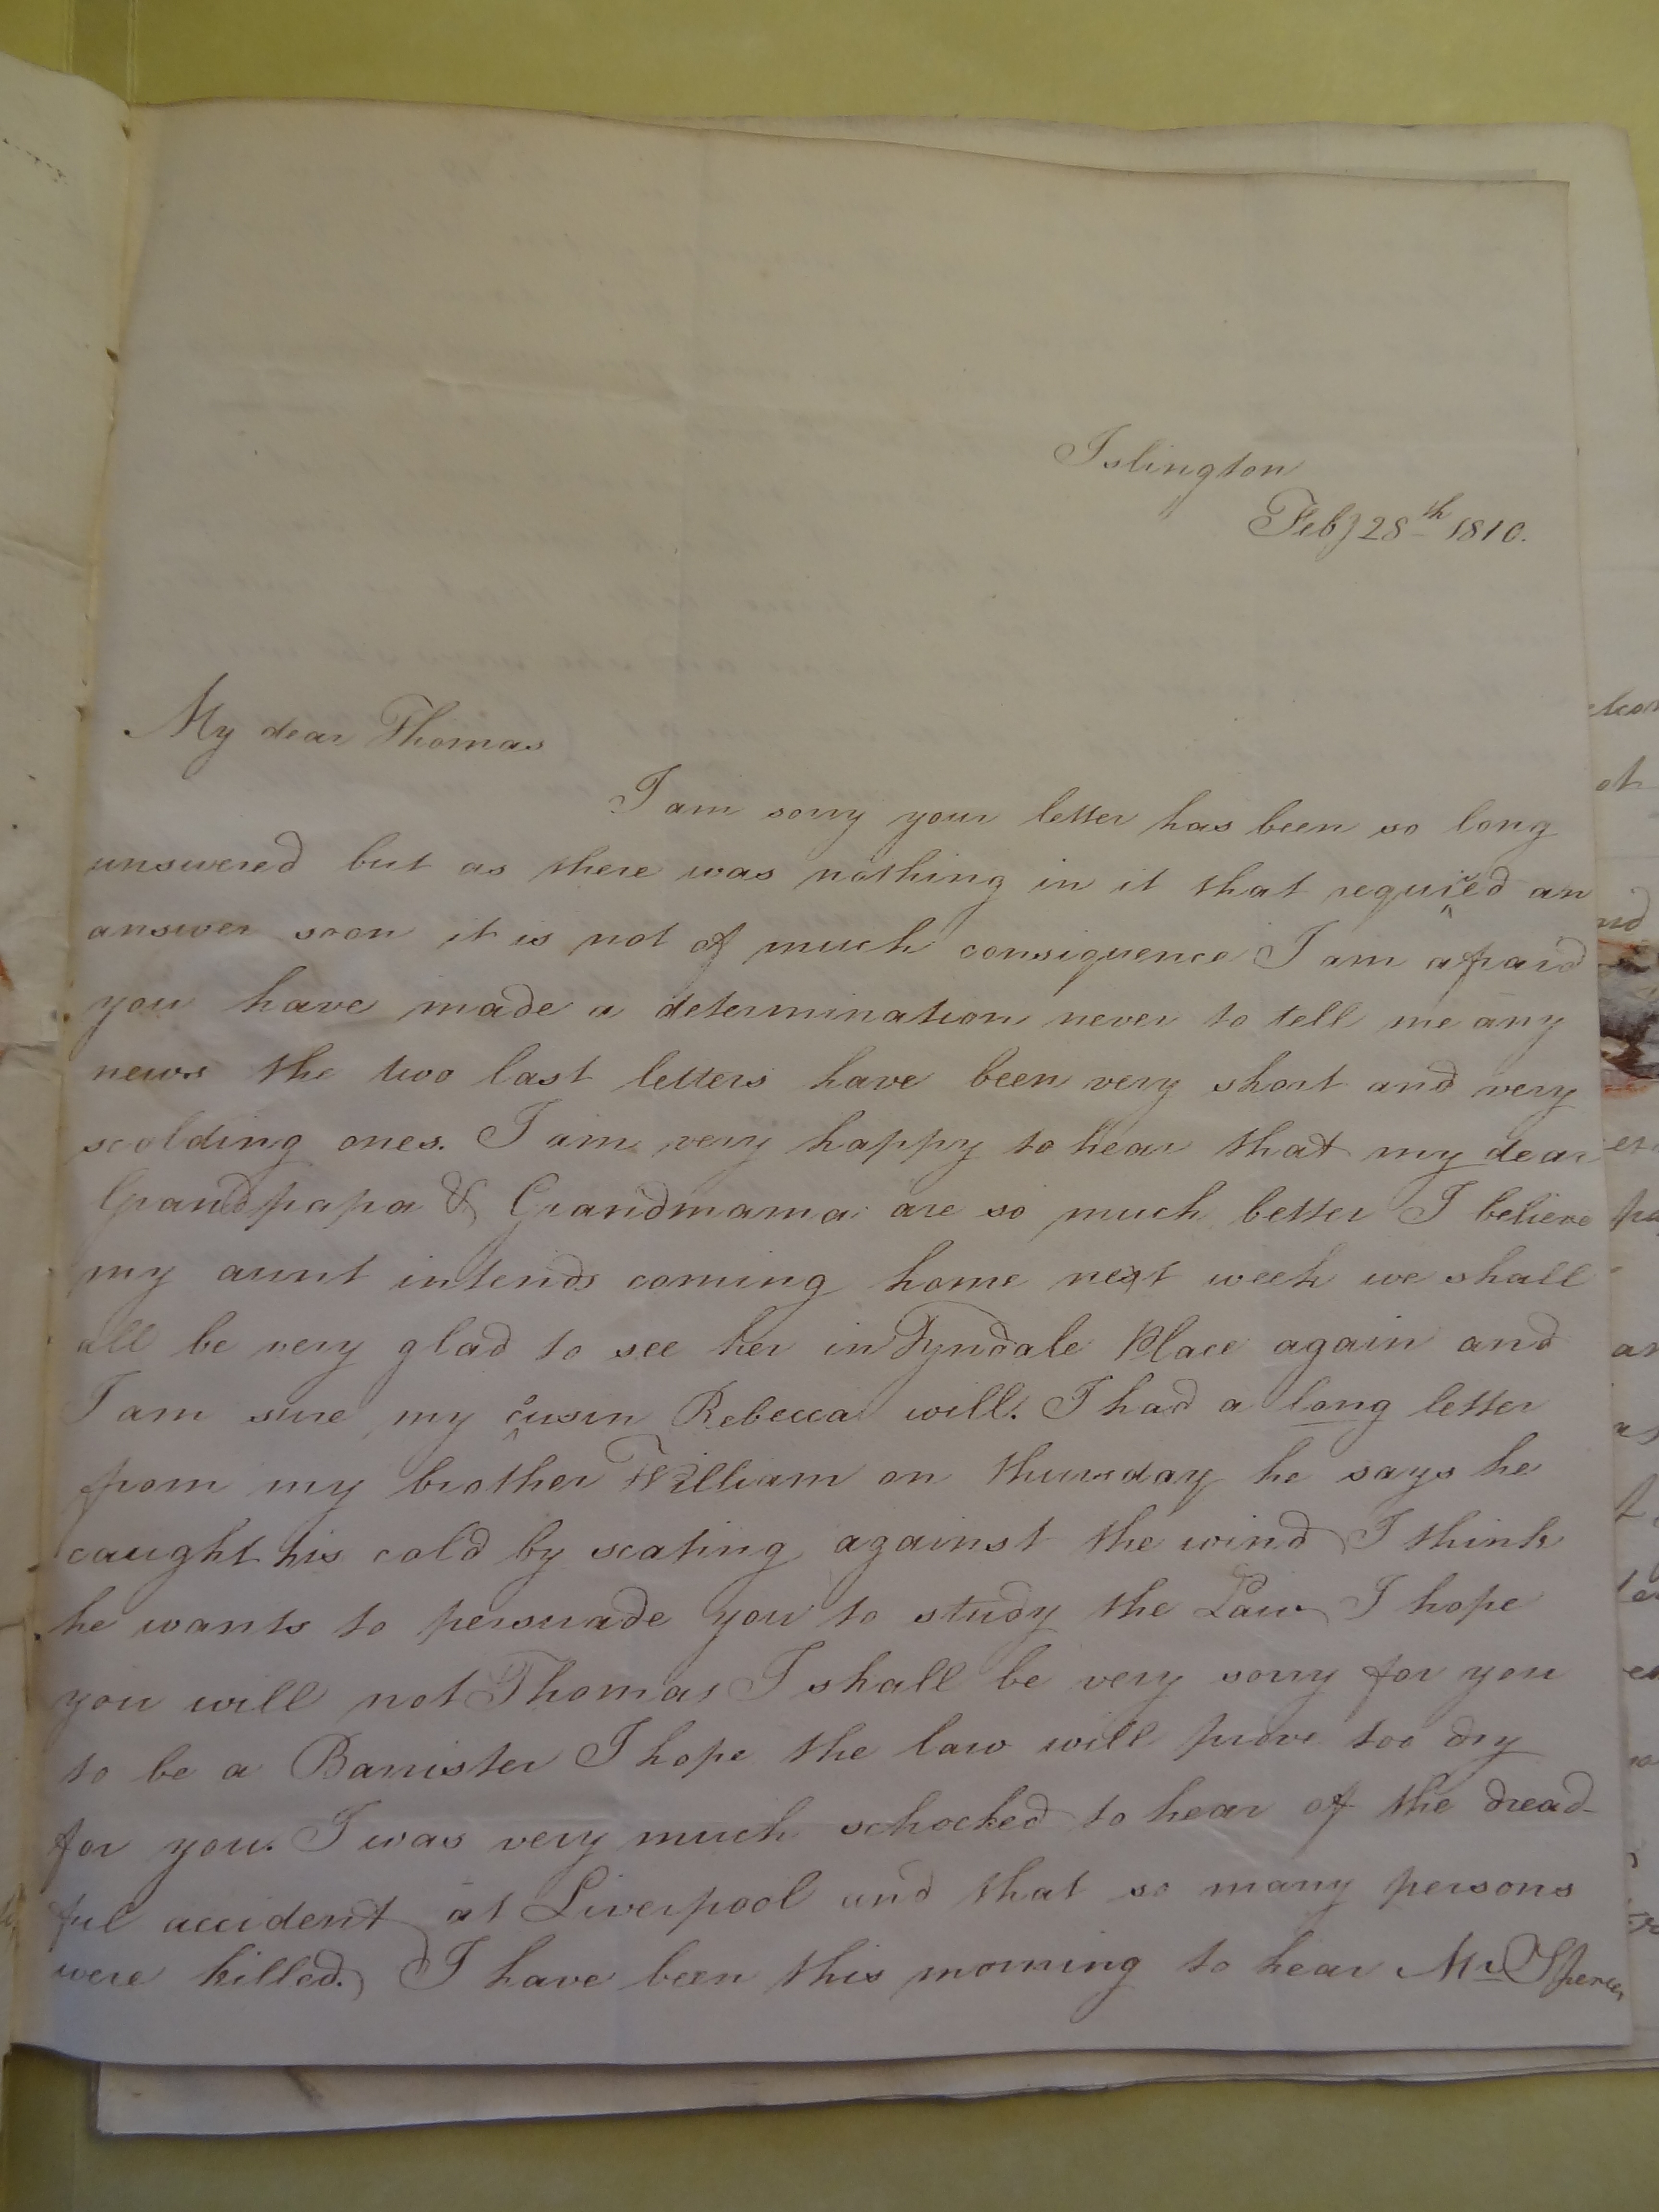 Image #1 of letter: Rebekah Hope to Thomas Bateman, 28 February 1810